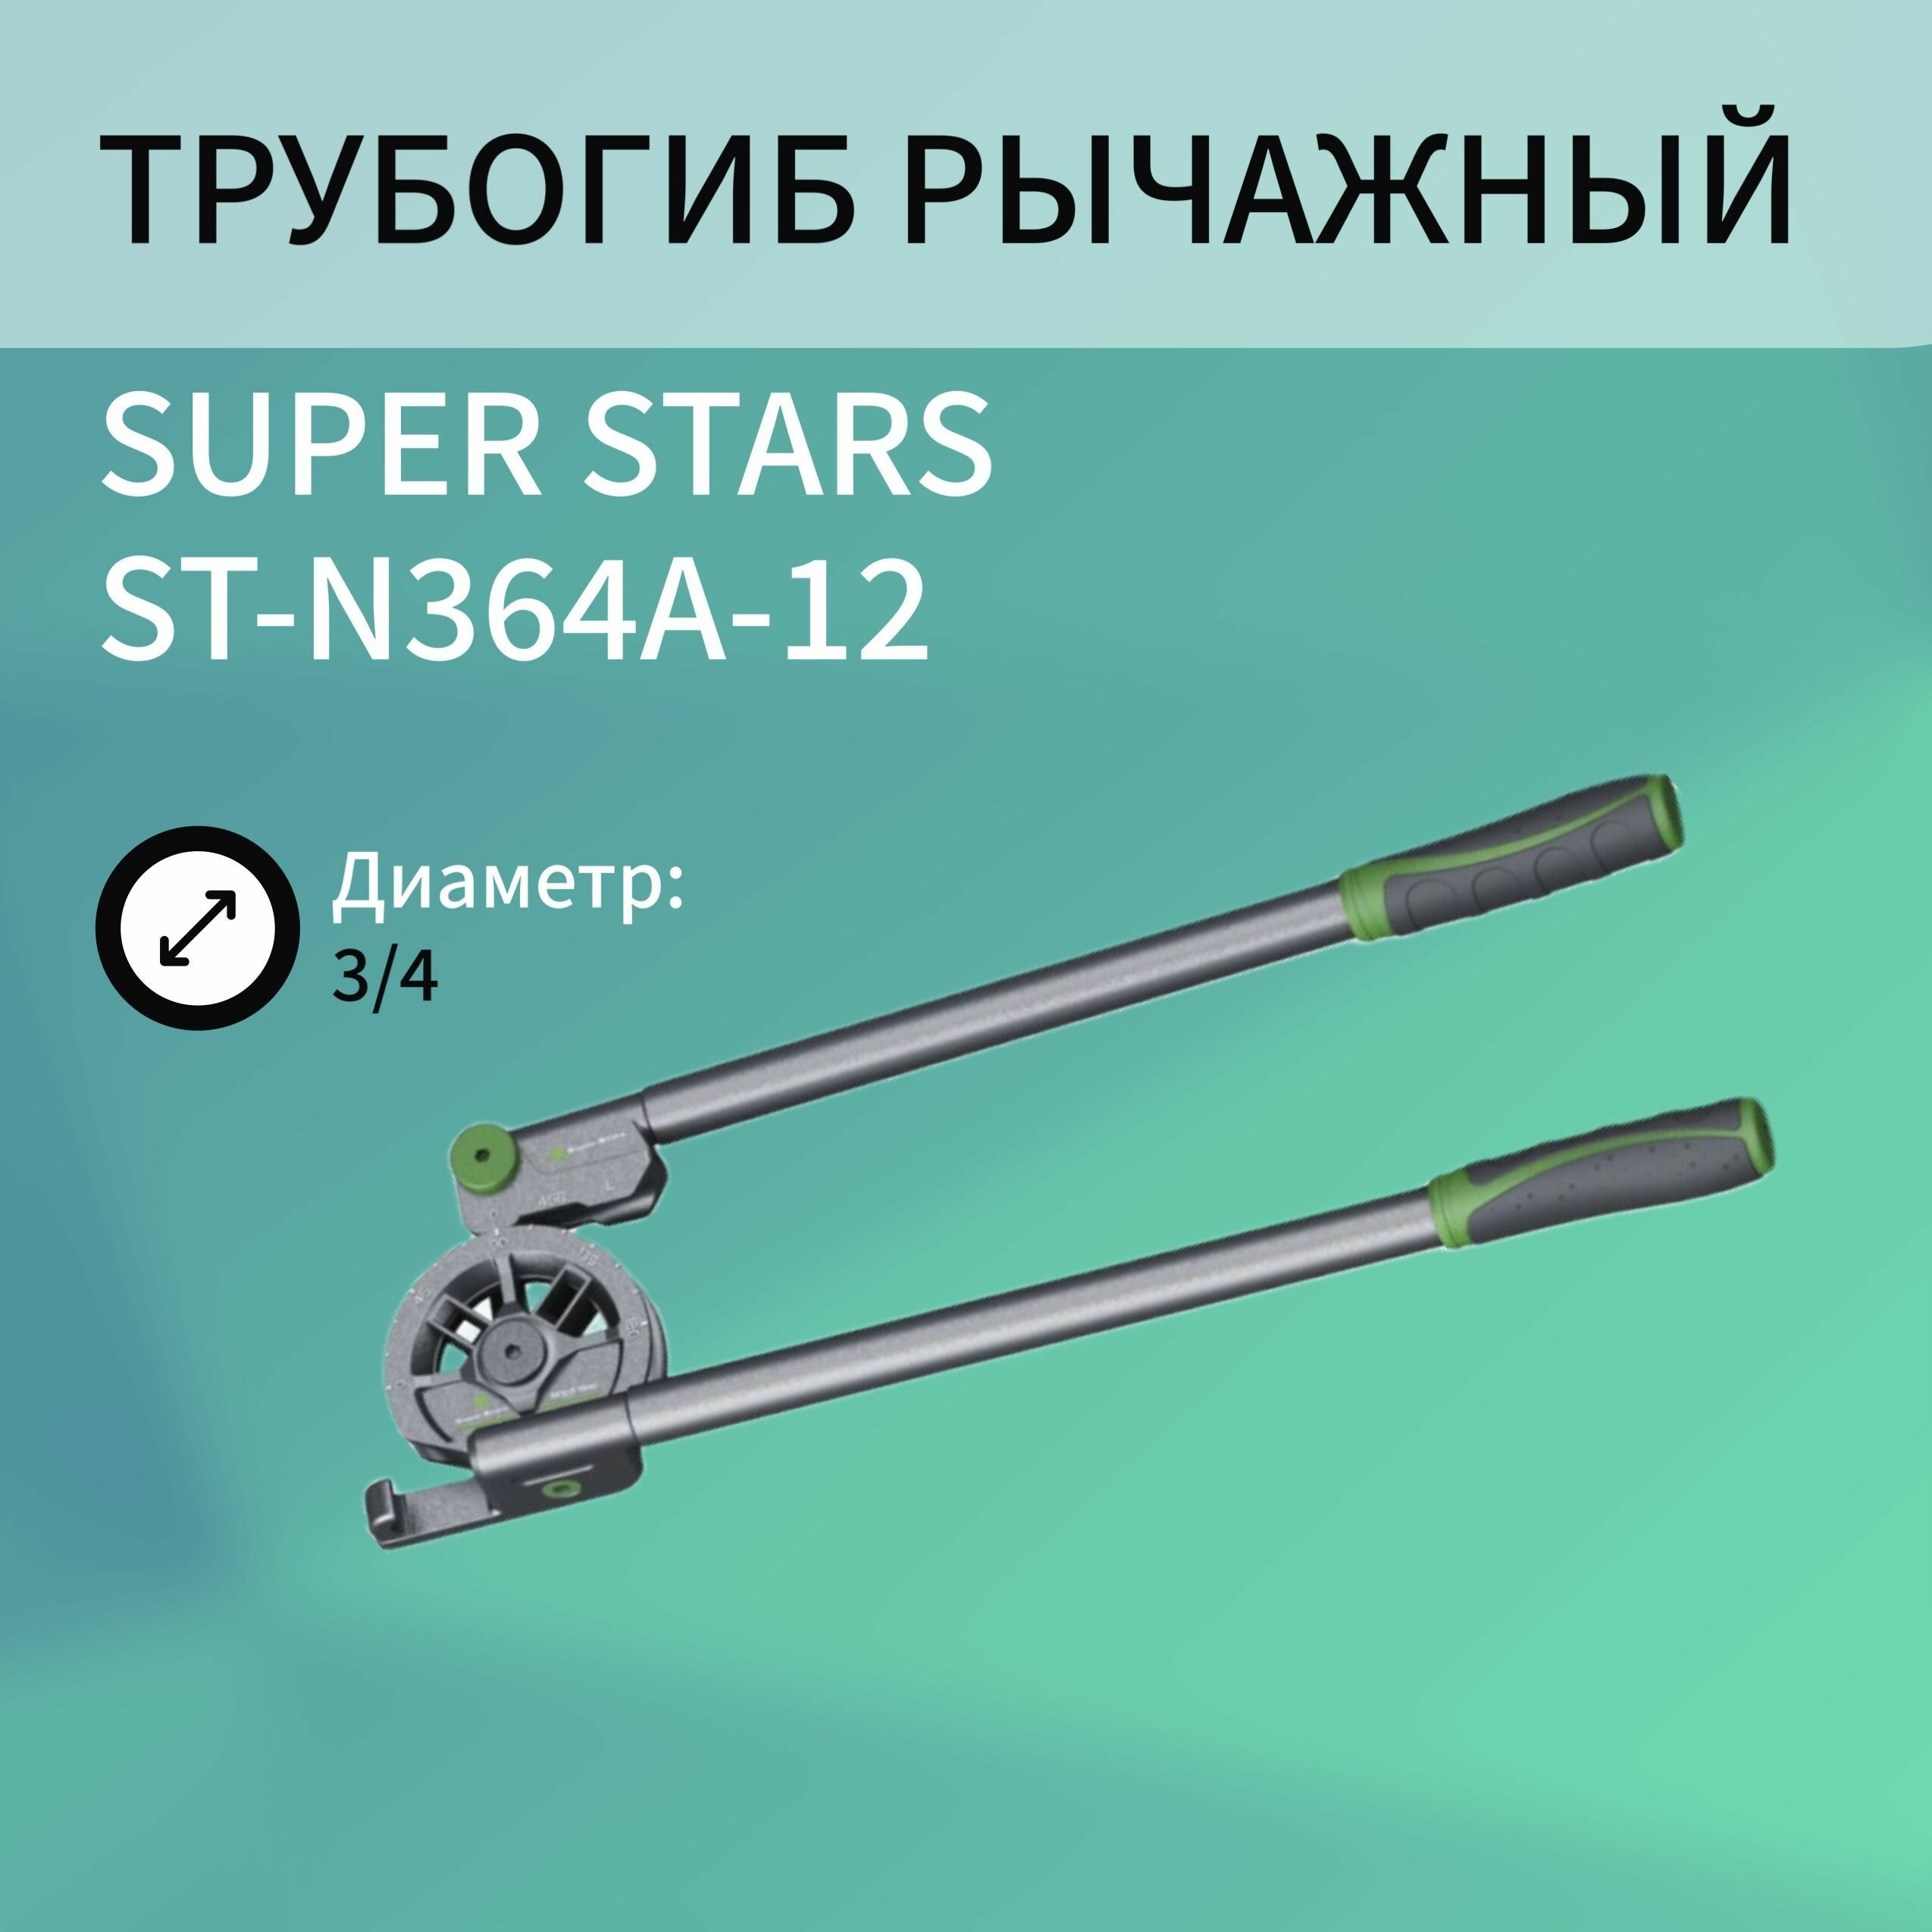 Трубогиб рычажный SUPER STARS ST-N364A-12 диаметр 3/4"